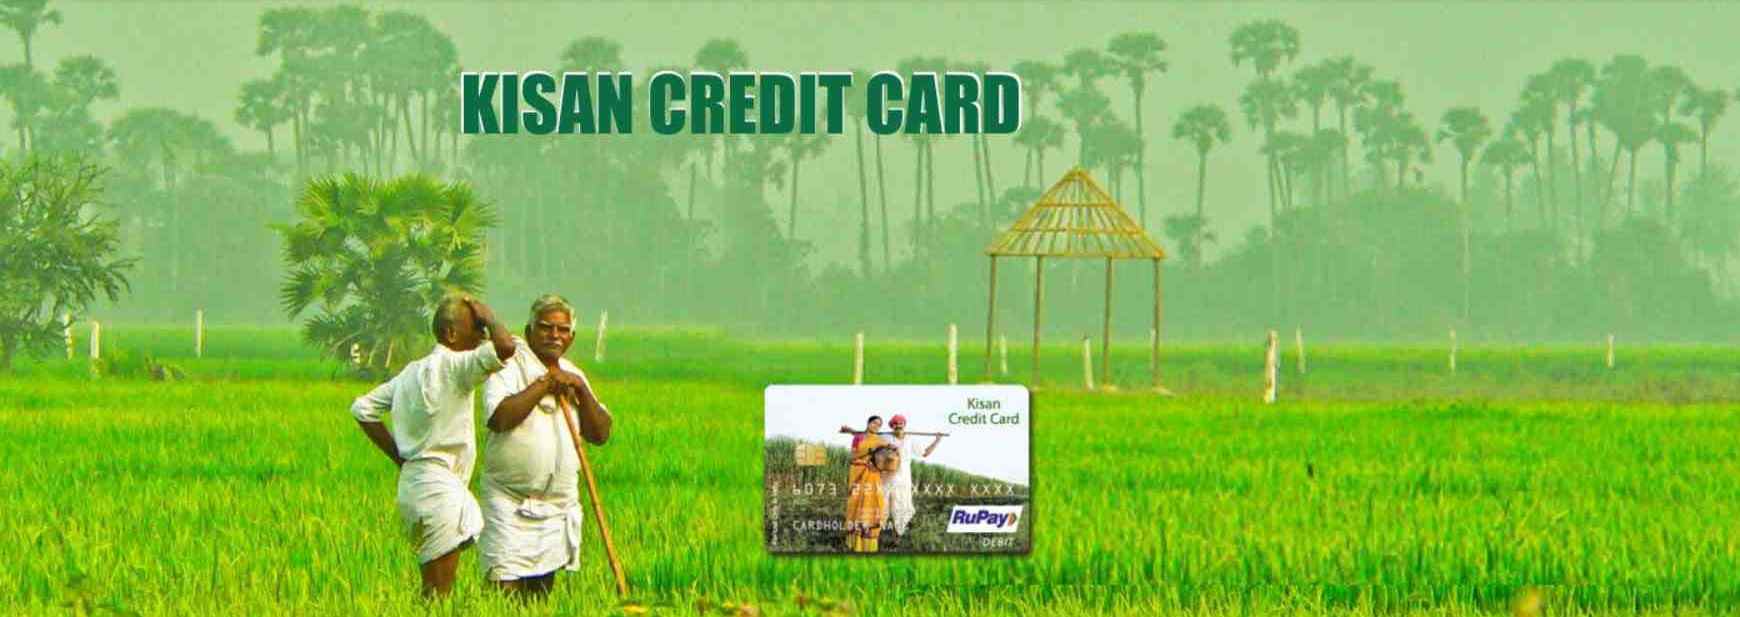 kisan credit card online apply